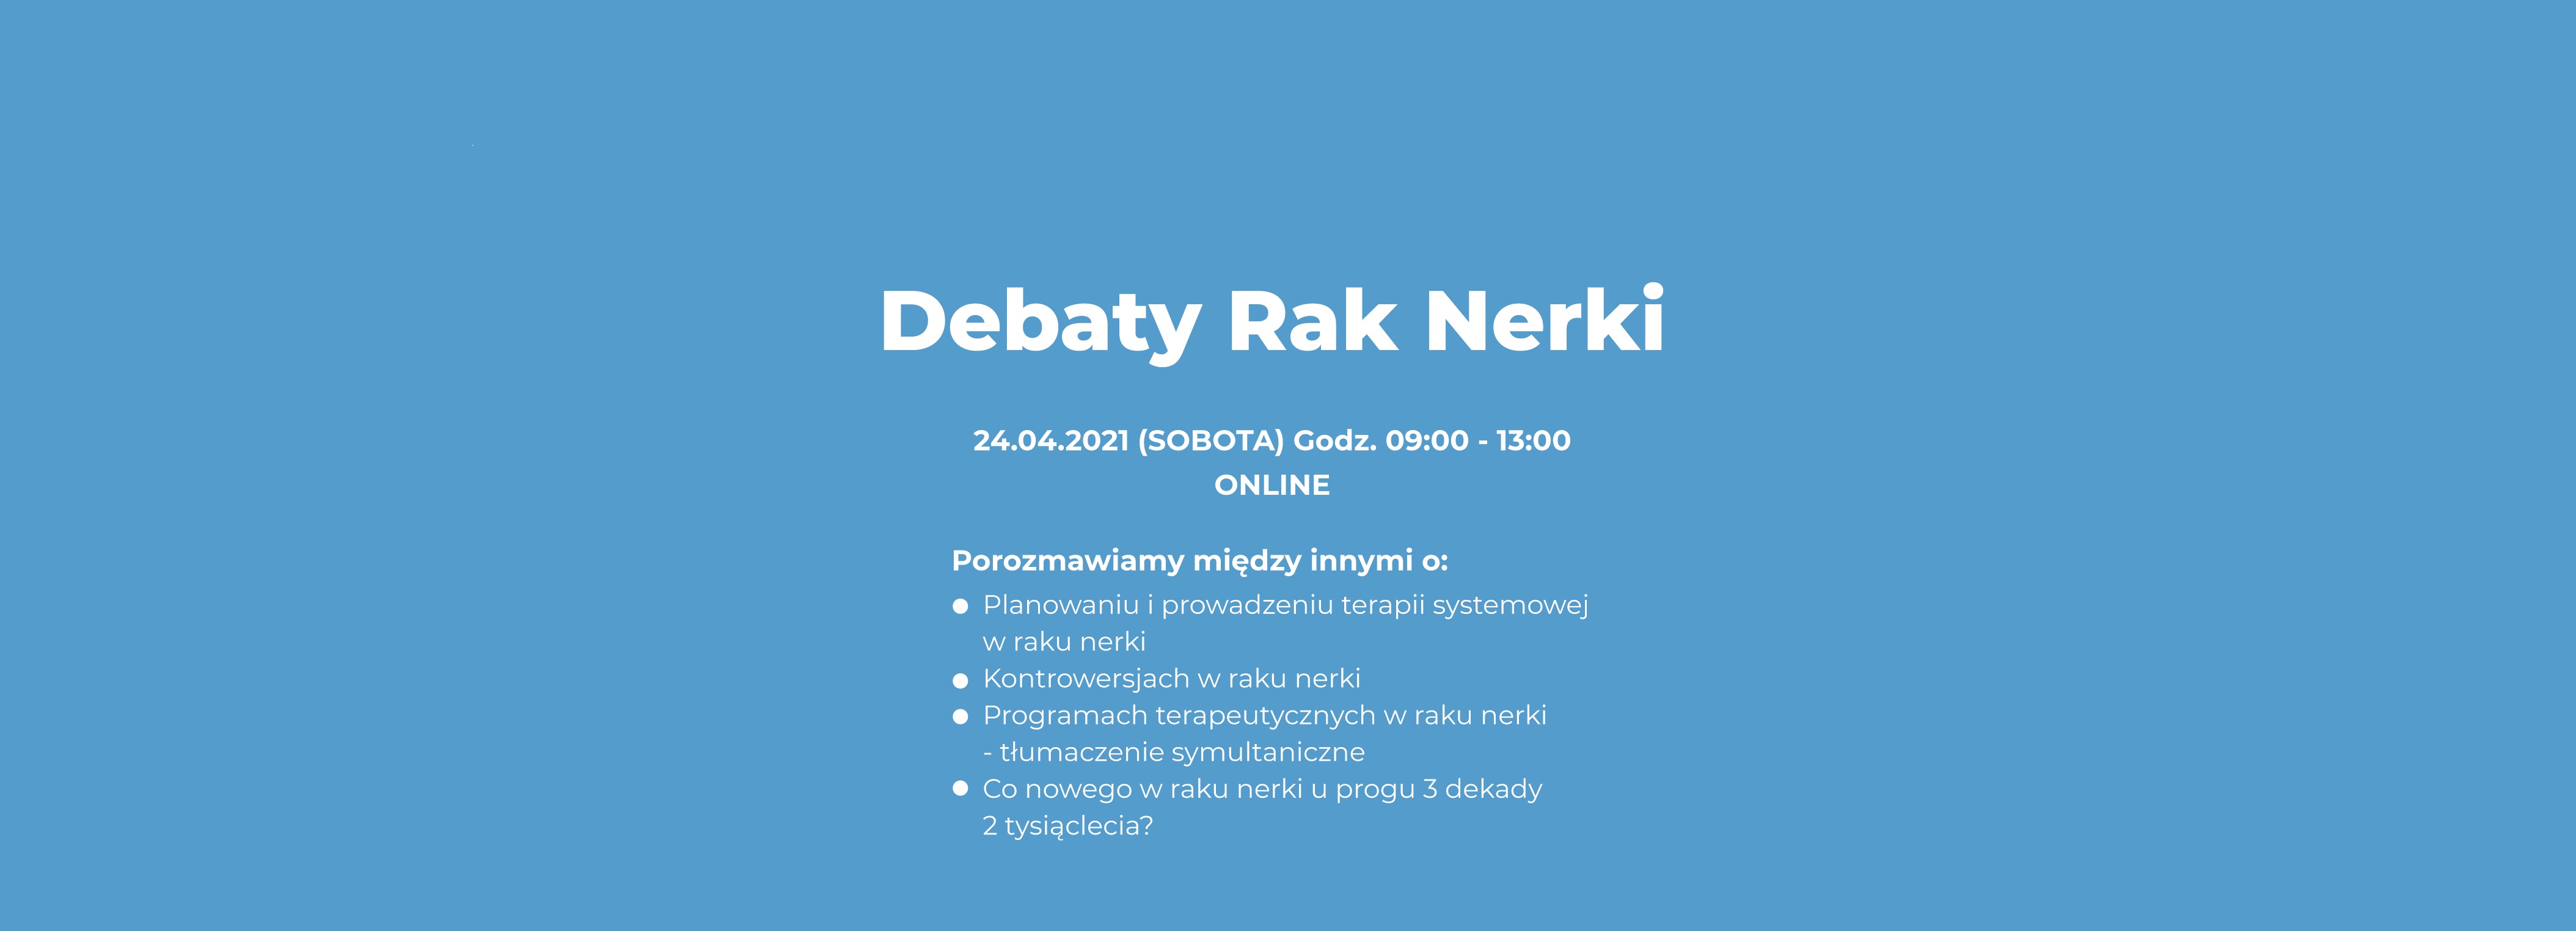 Debaty Rak Nerki | ONLINE | 24.04.2021